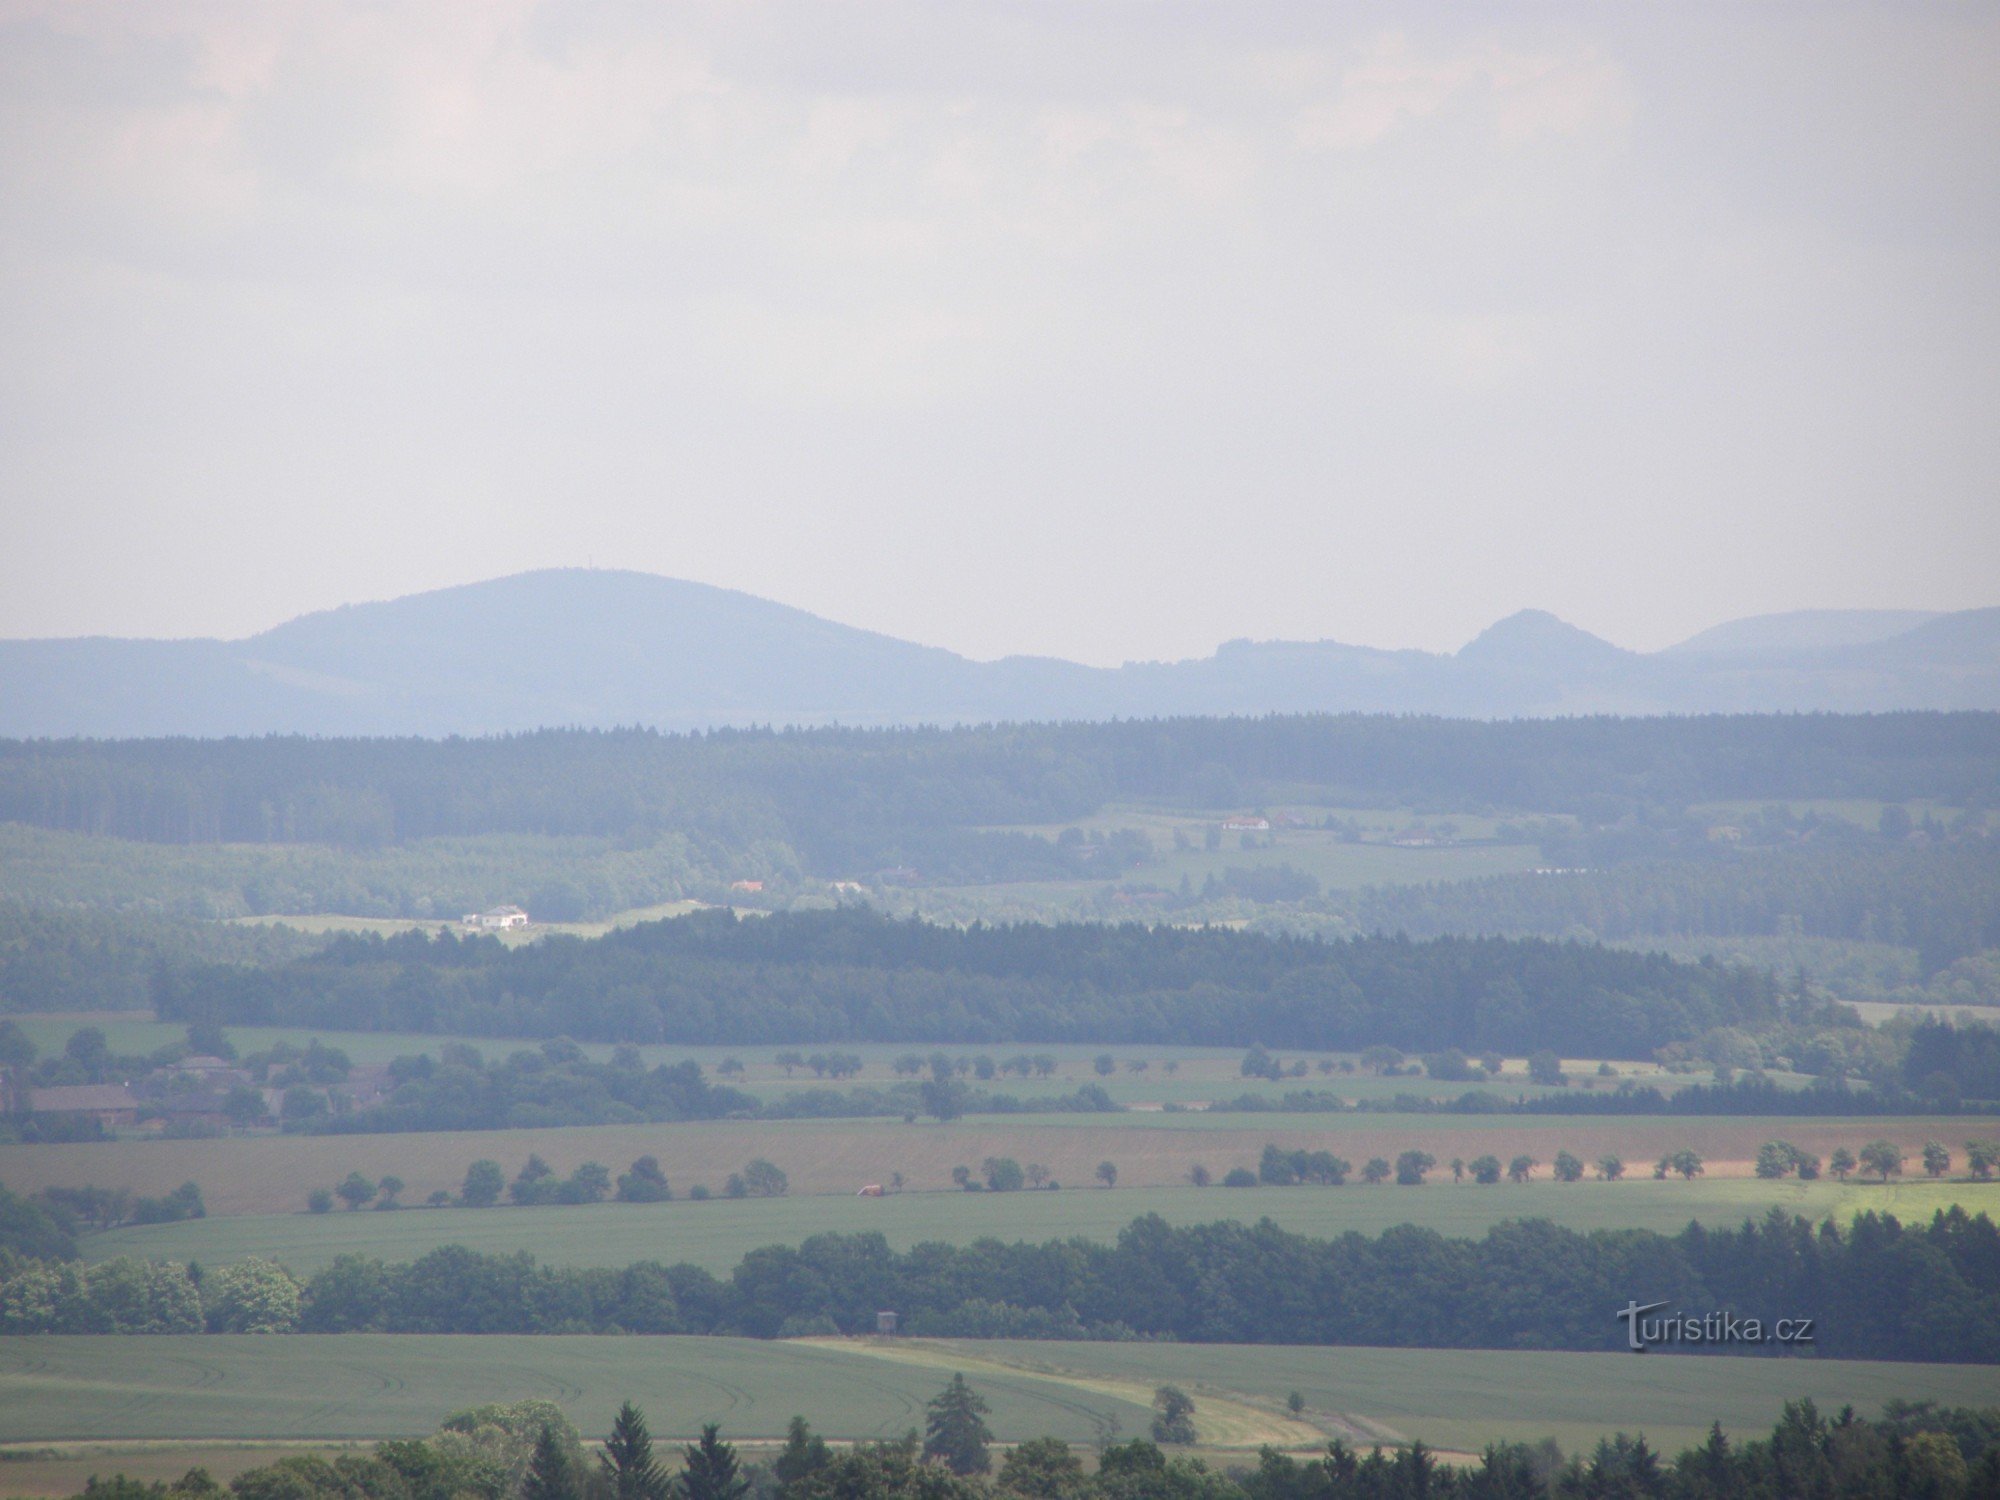 Barunčas udsigtspunkt nær Horiček